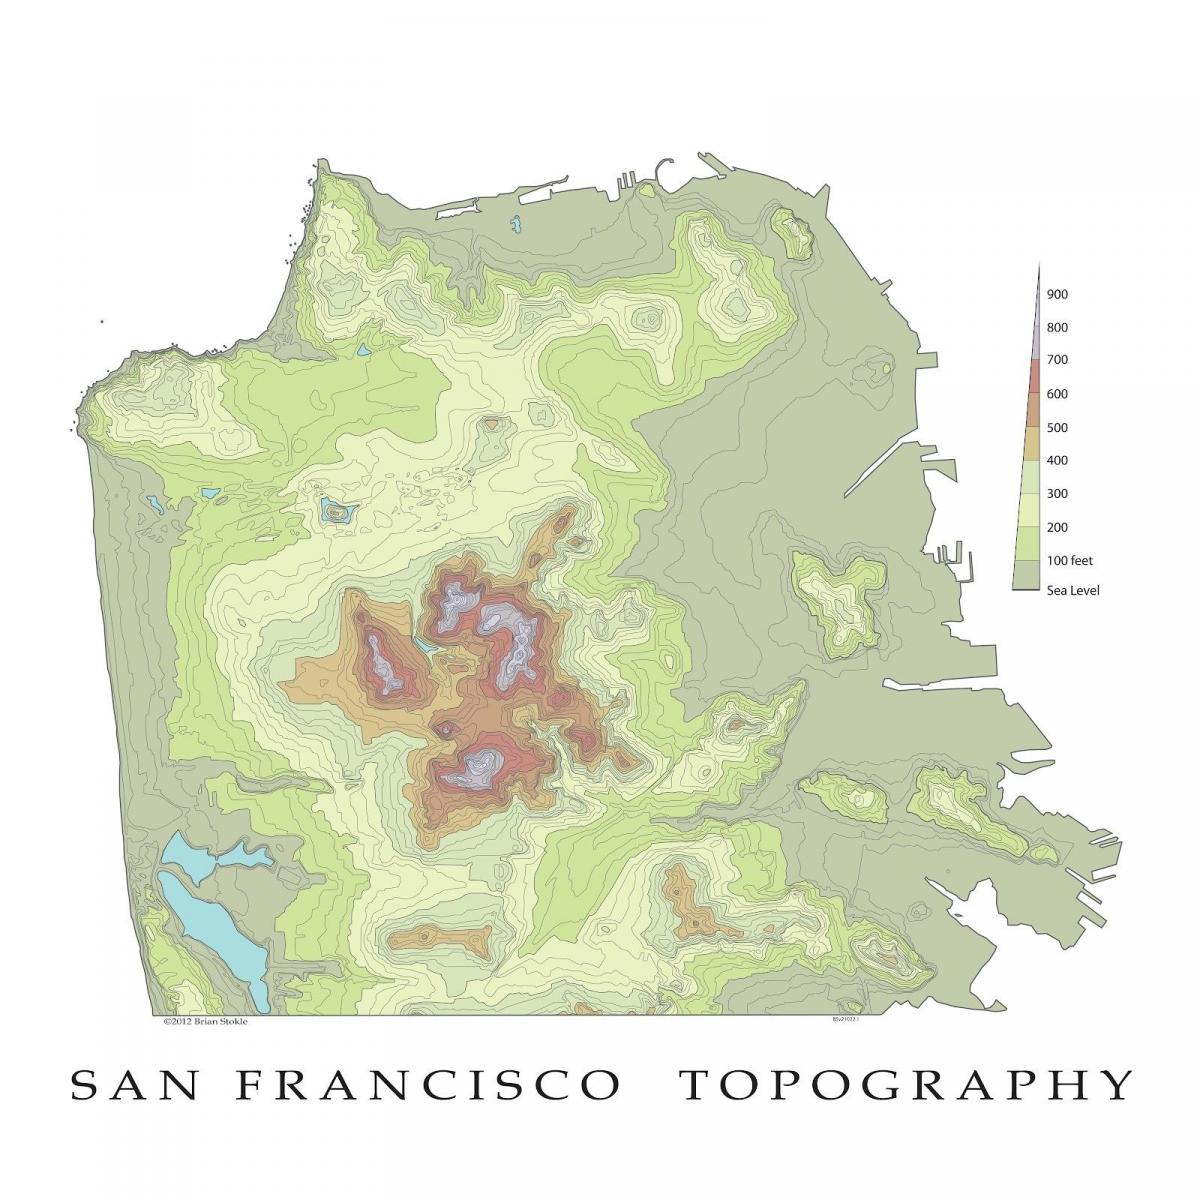 San Francisco topographic ramani